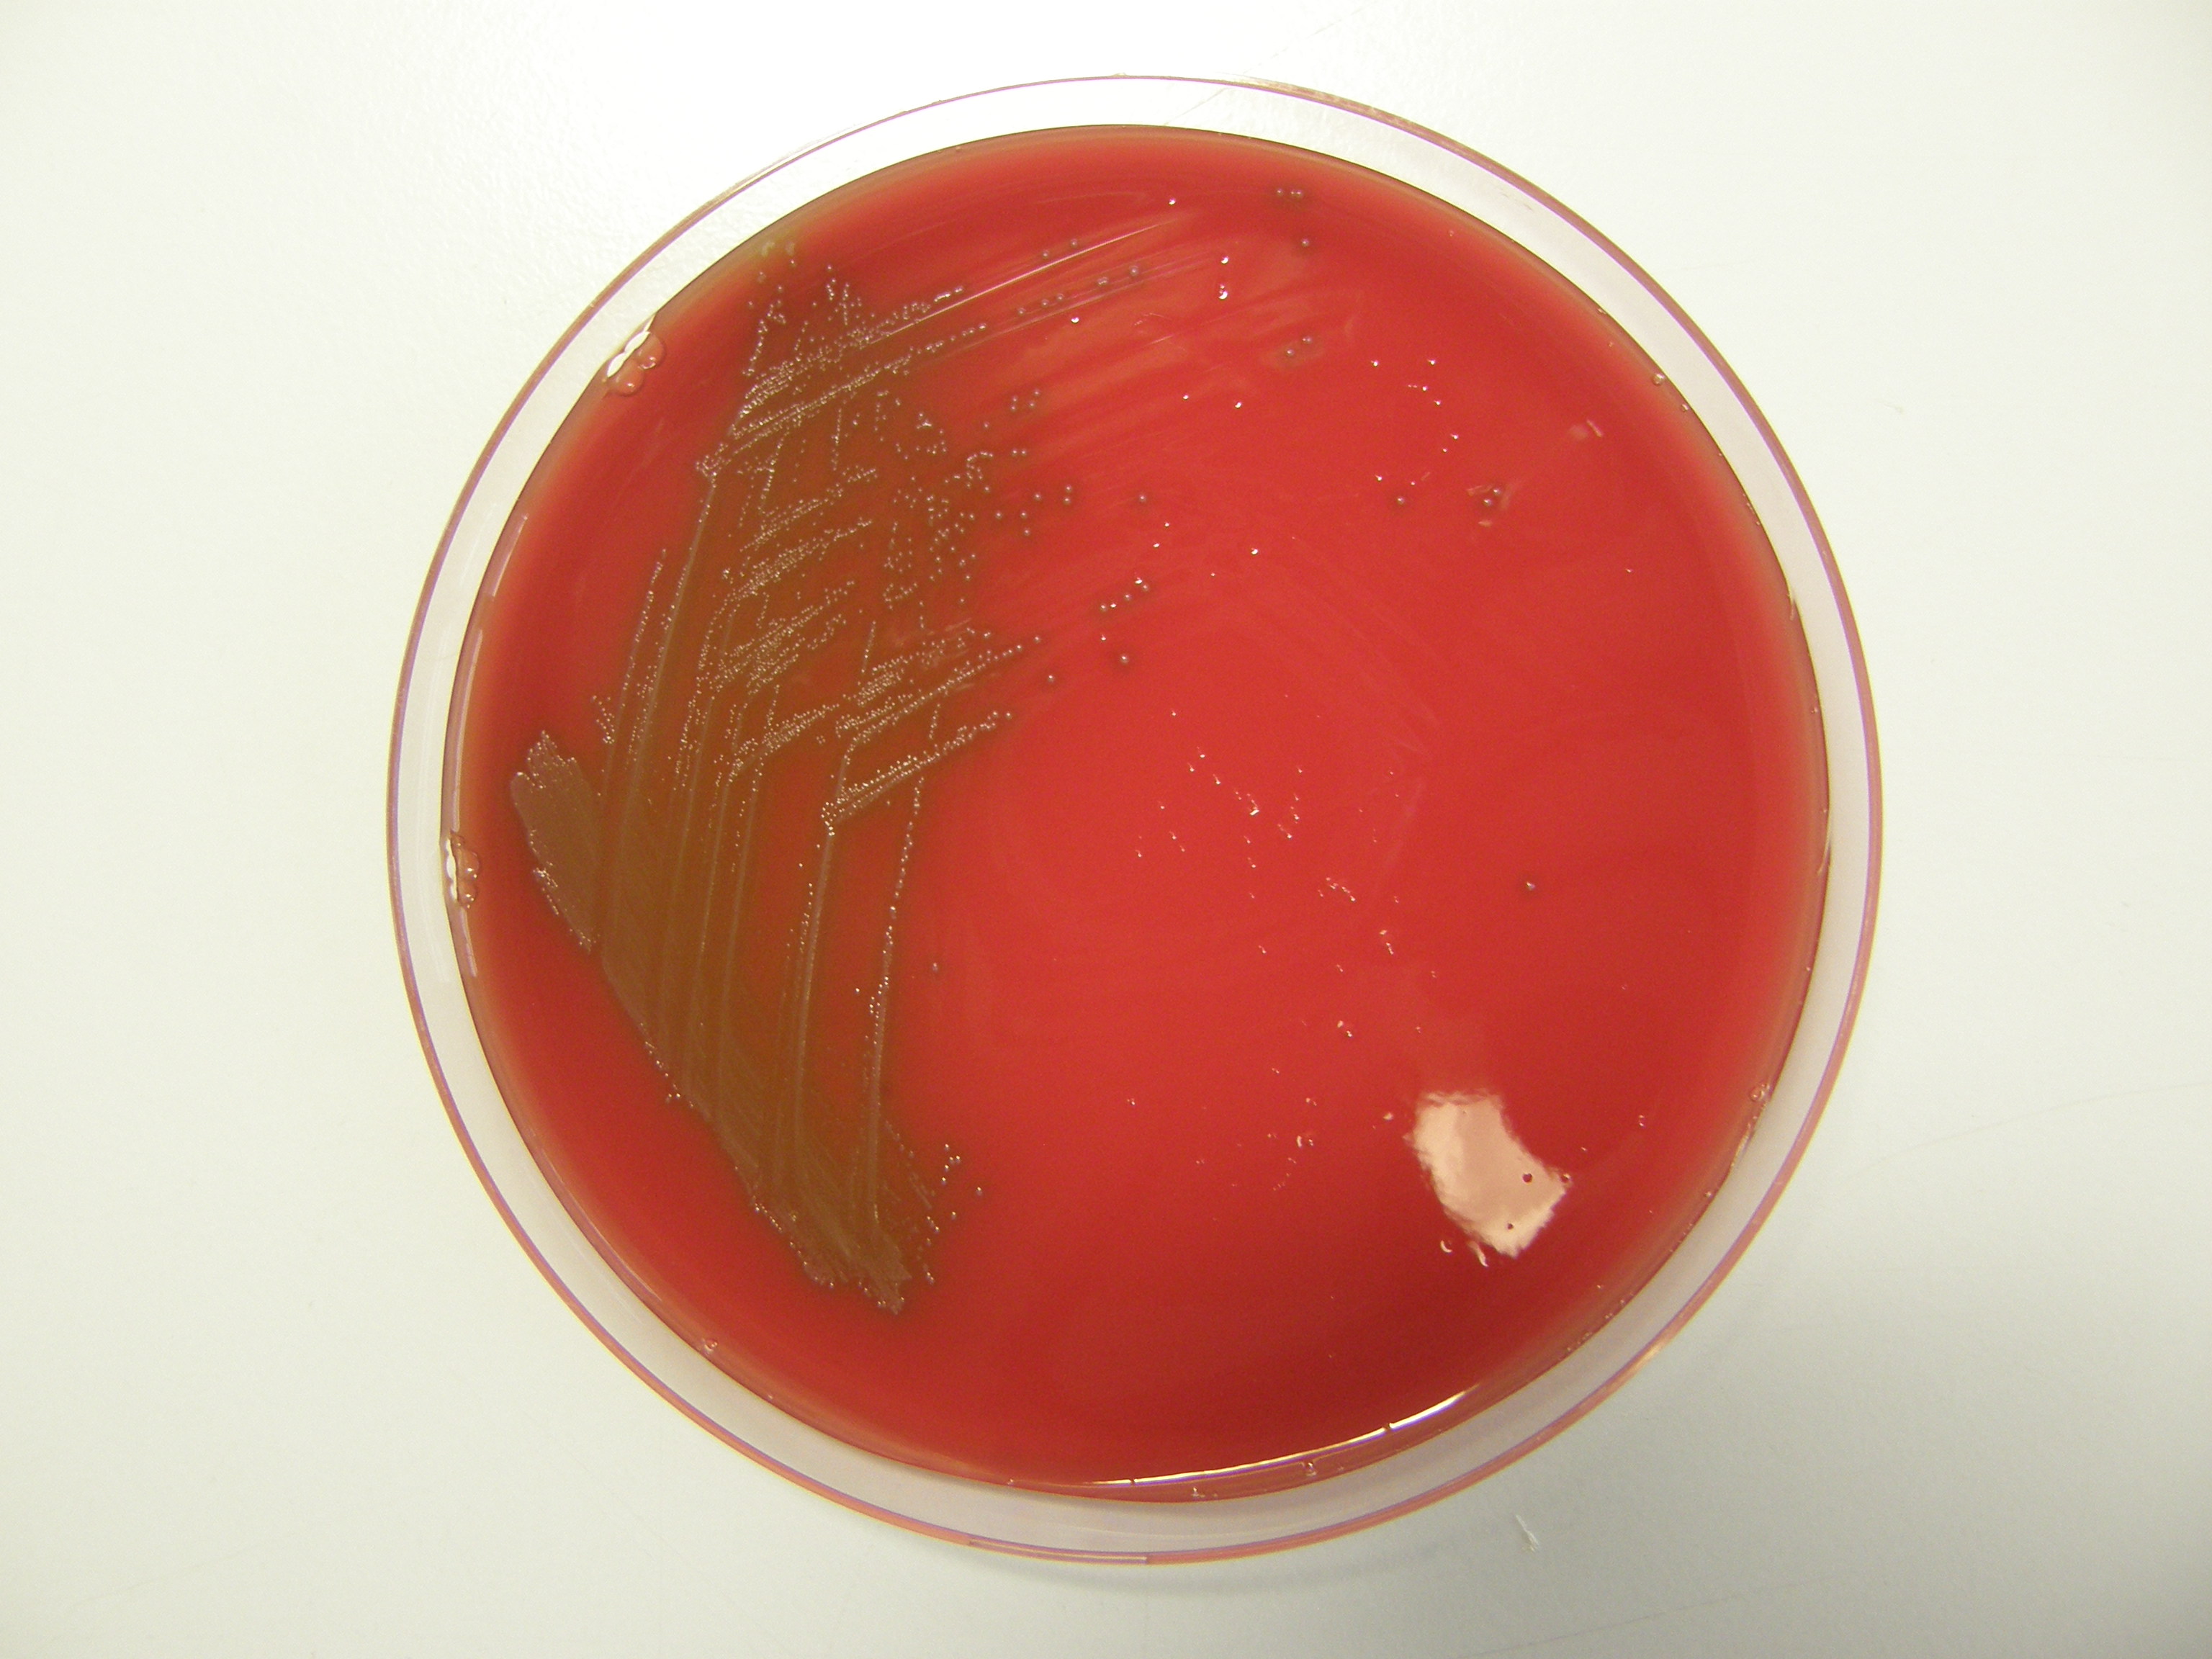 Enterococcus rafinosus